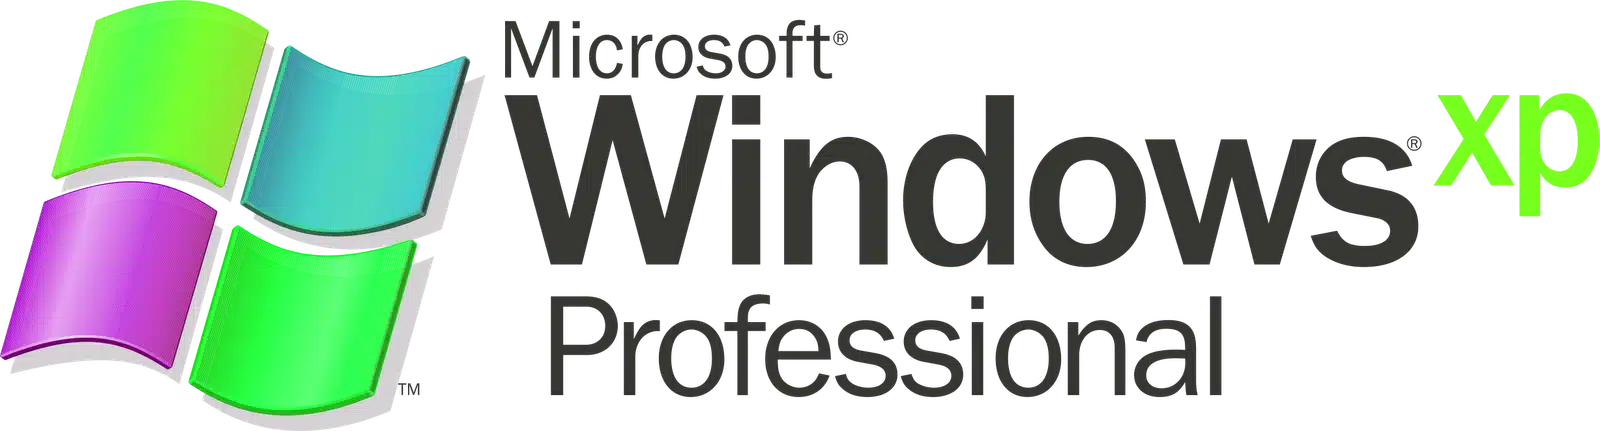 Windows XP Professional logo pic